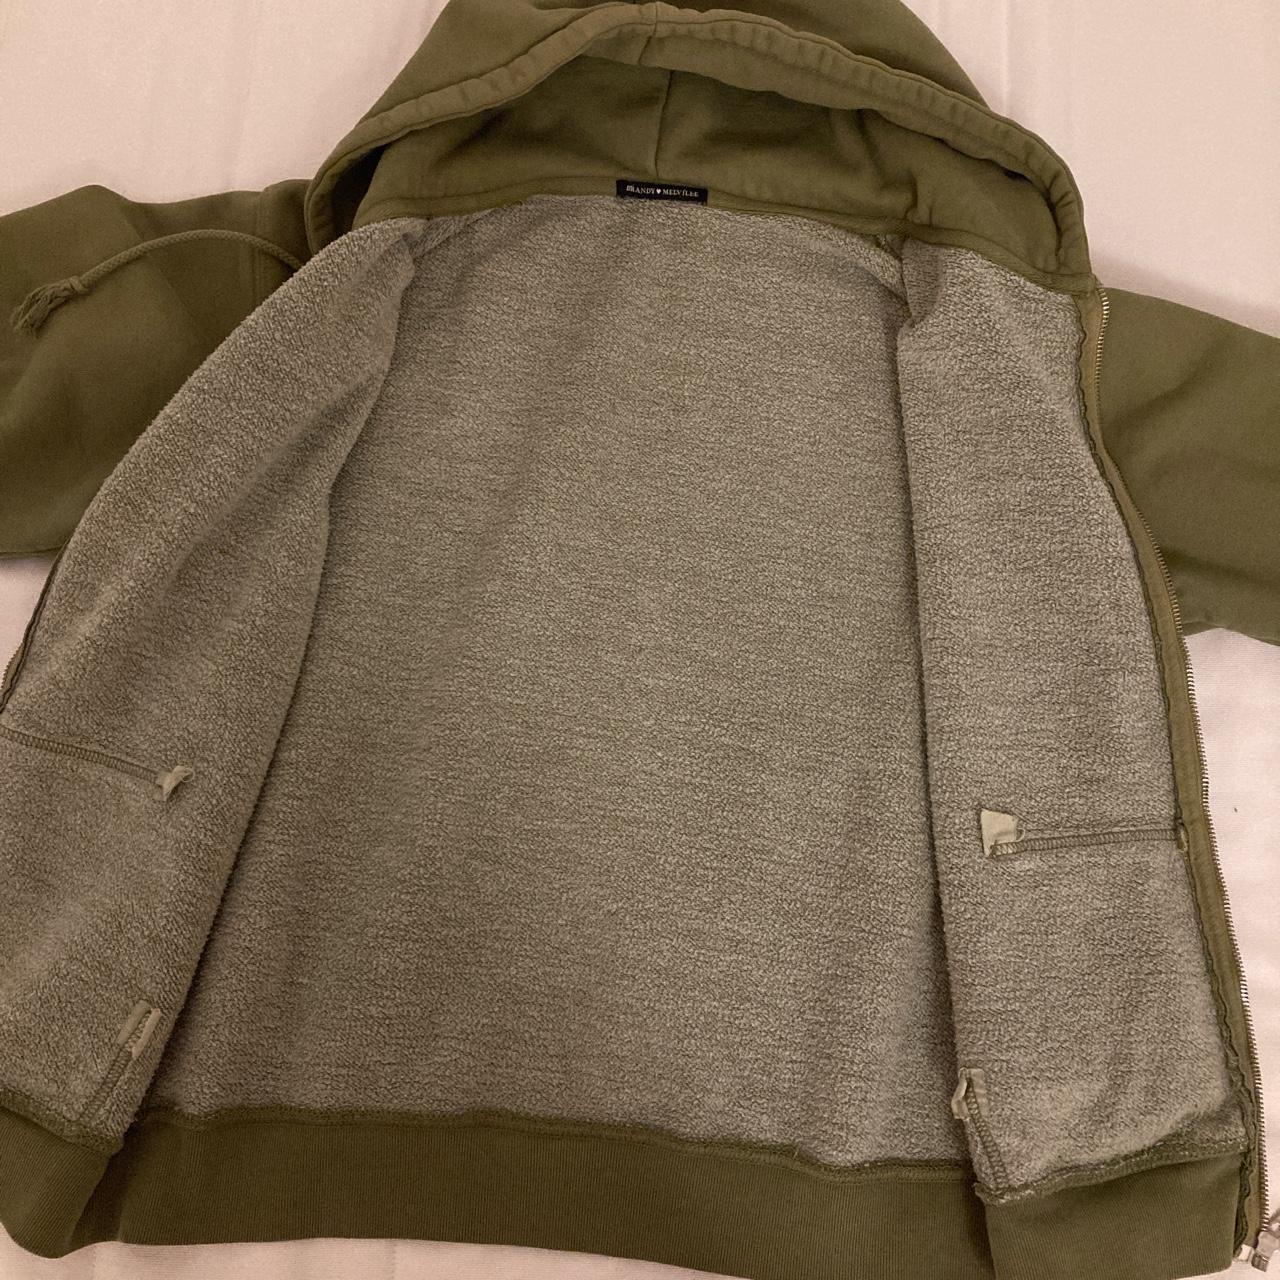 Brandy melville zip up hoodie, olive green oversized - Depop